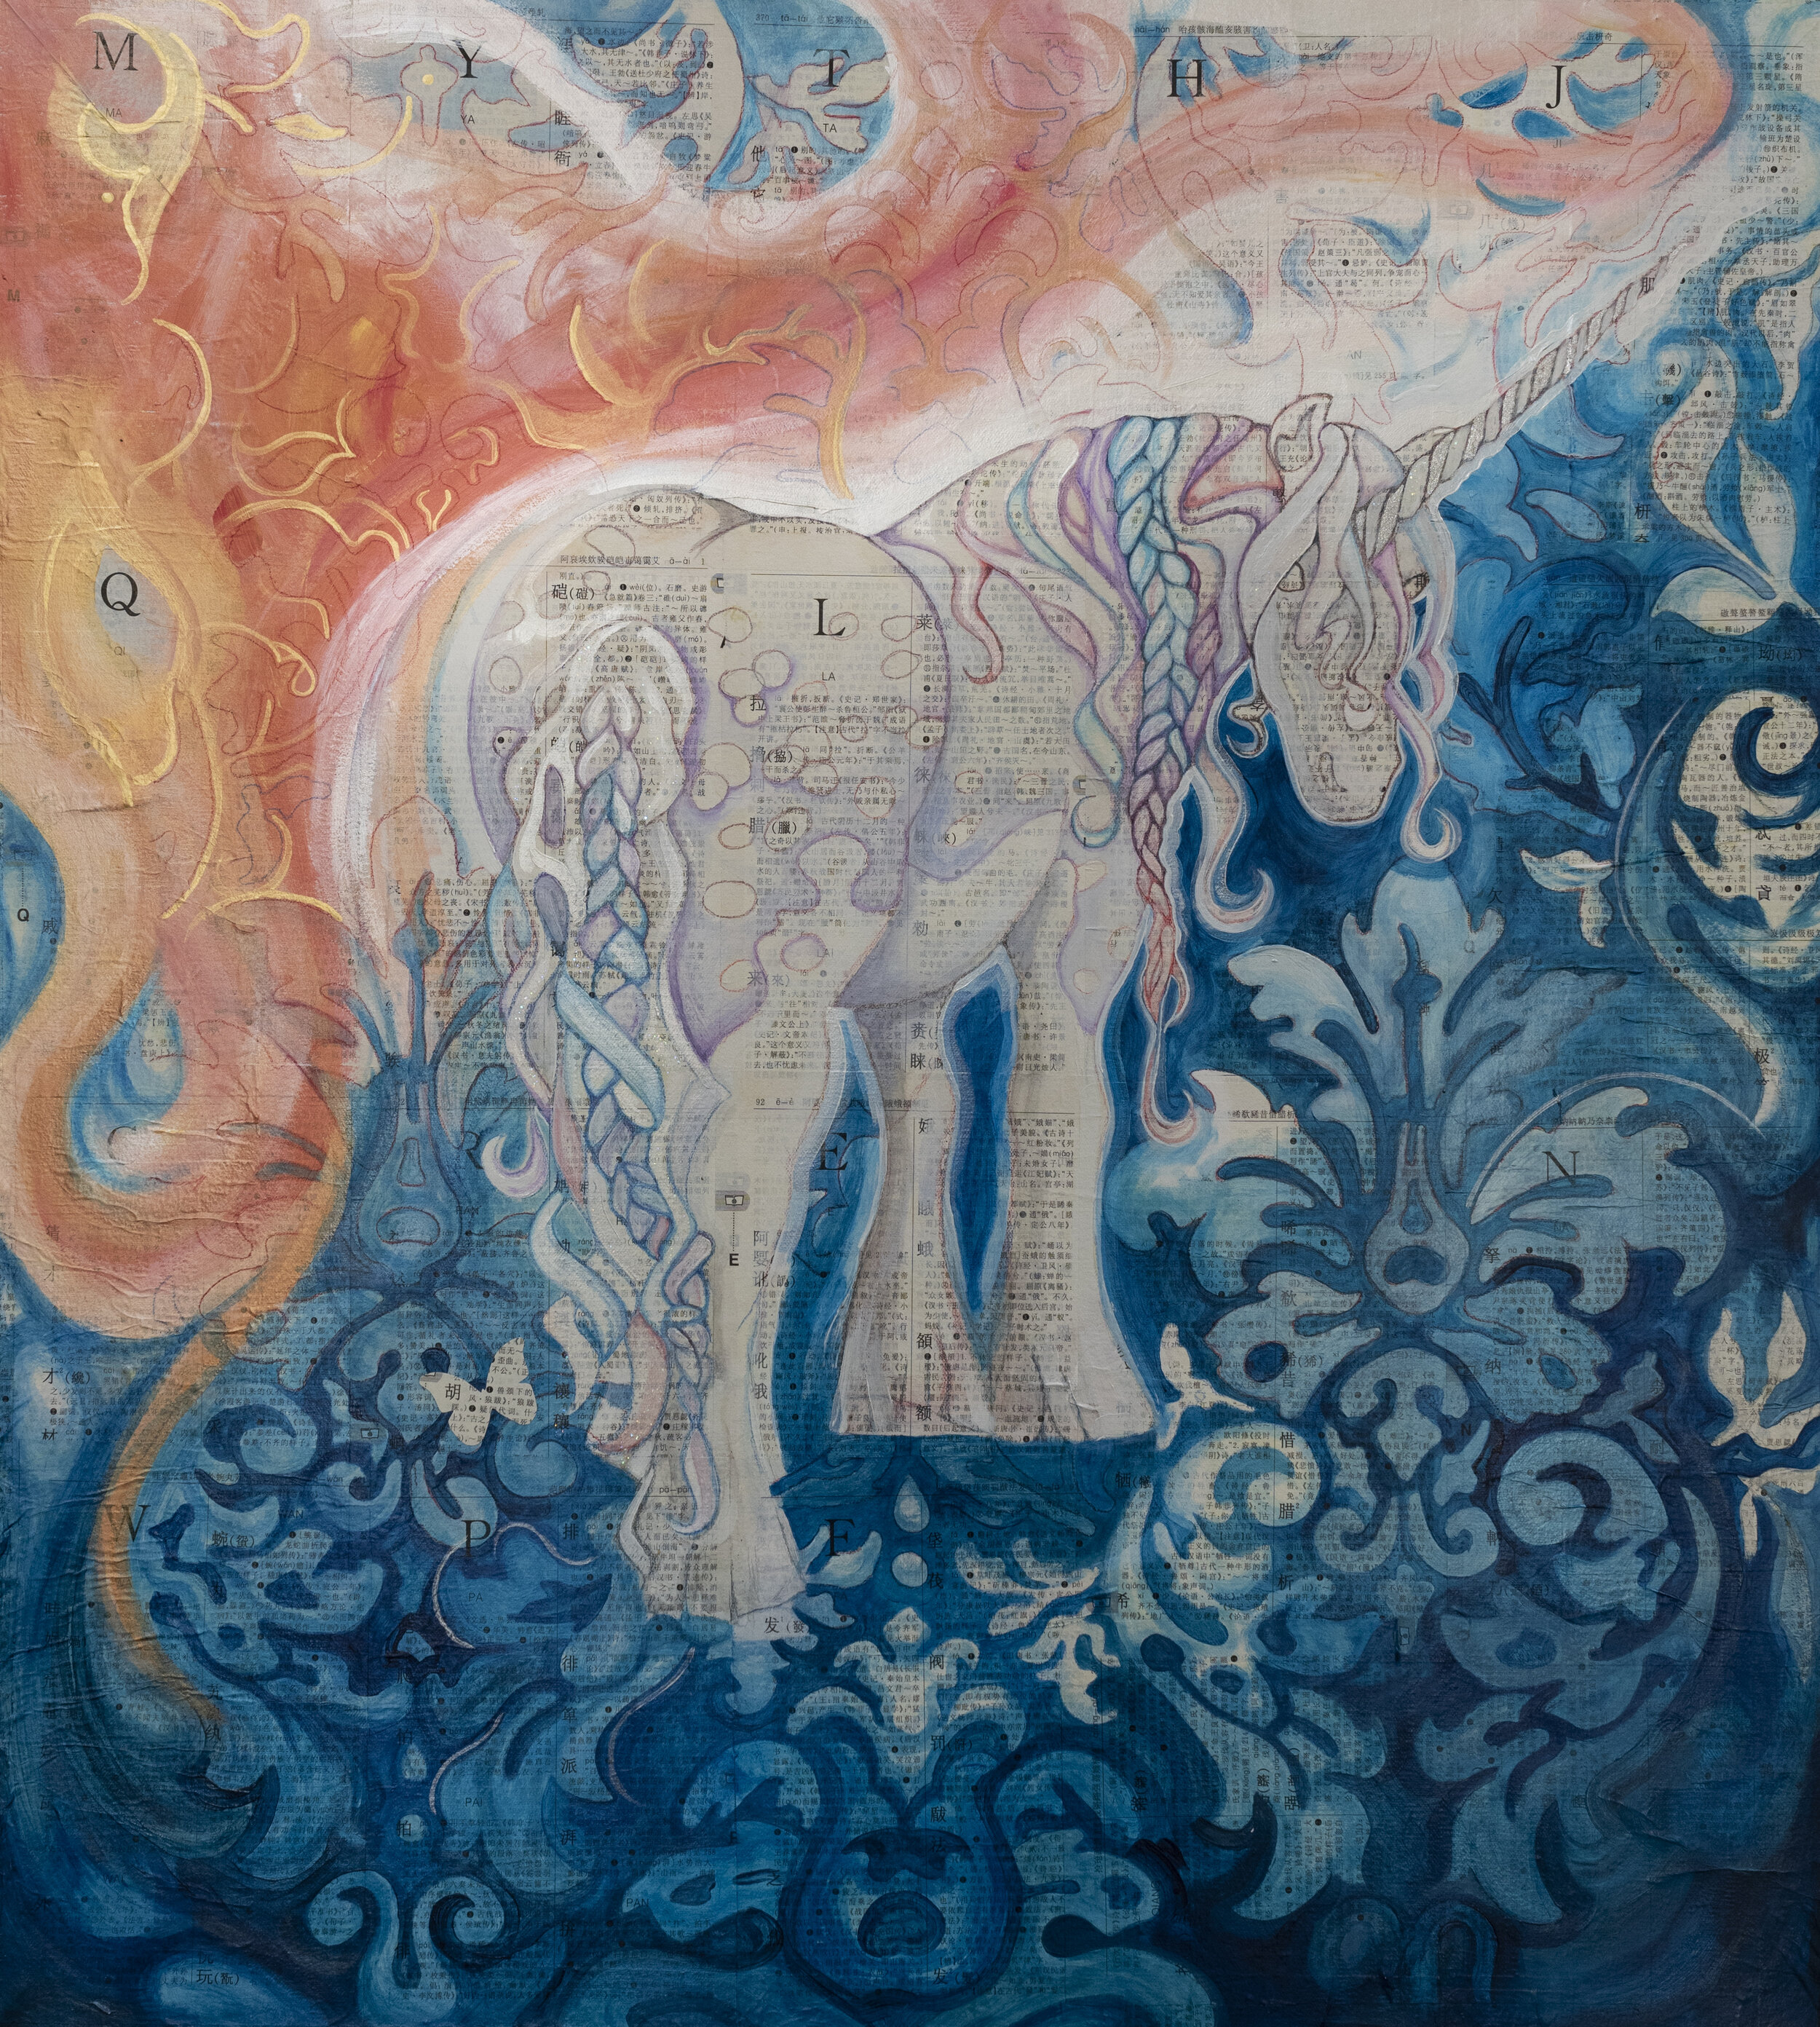 Mythjqal Creatjre (the Unicorn) (SOLD)